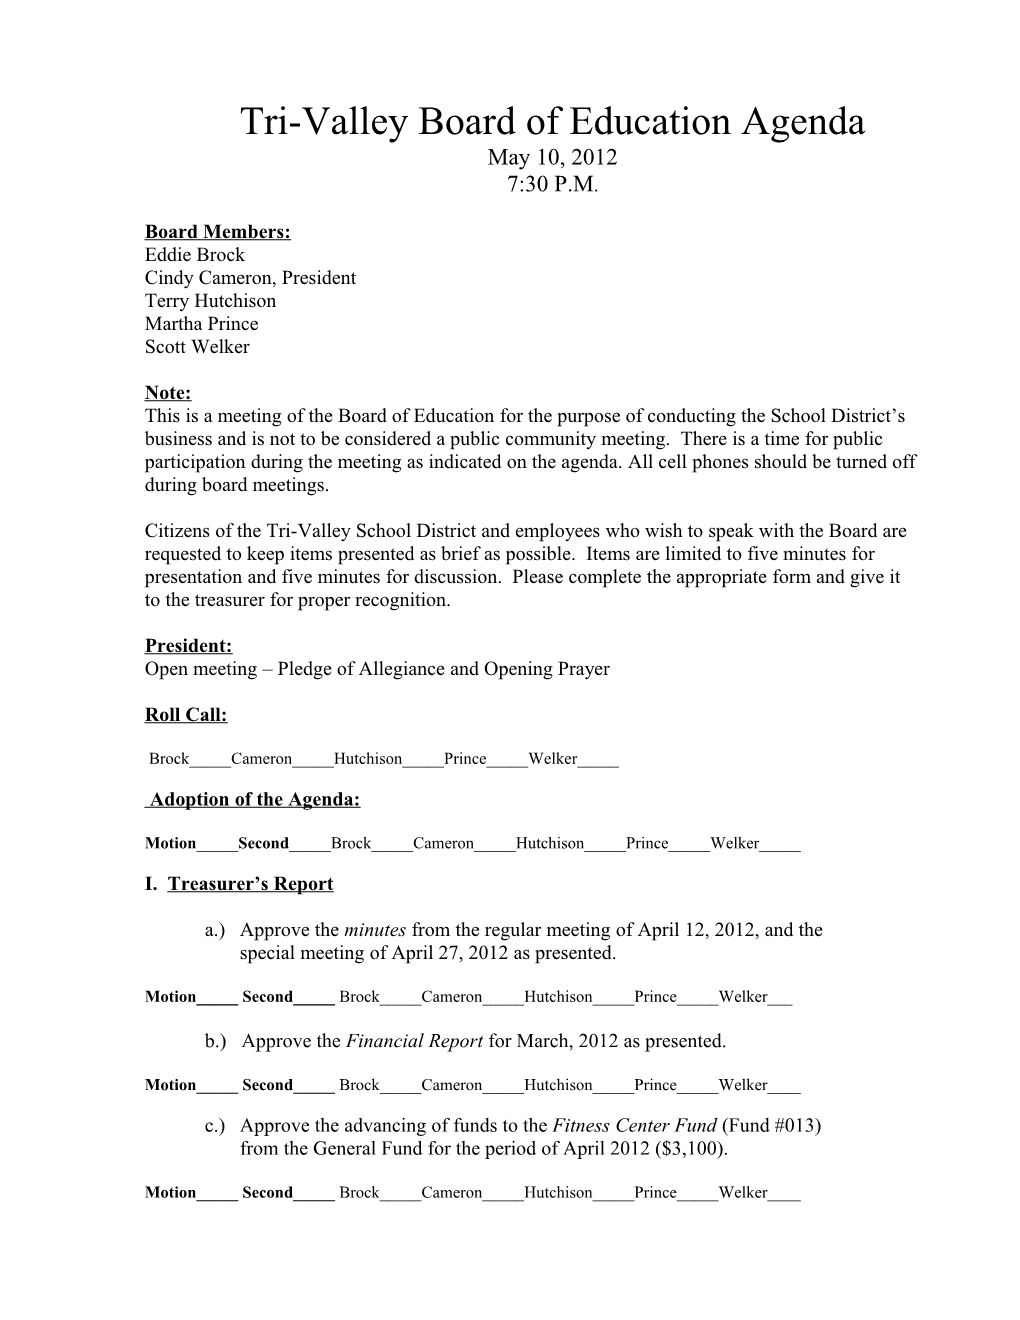 Tri-Valley Board of Education Agenda May 10, 2012